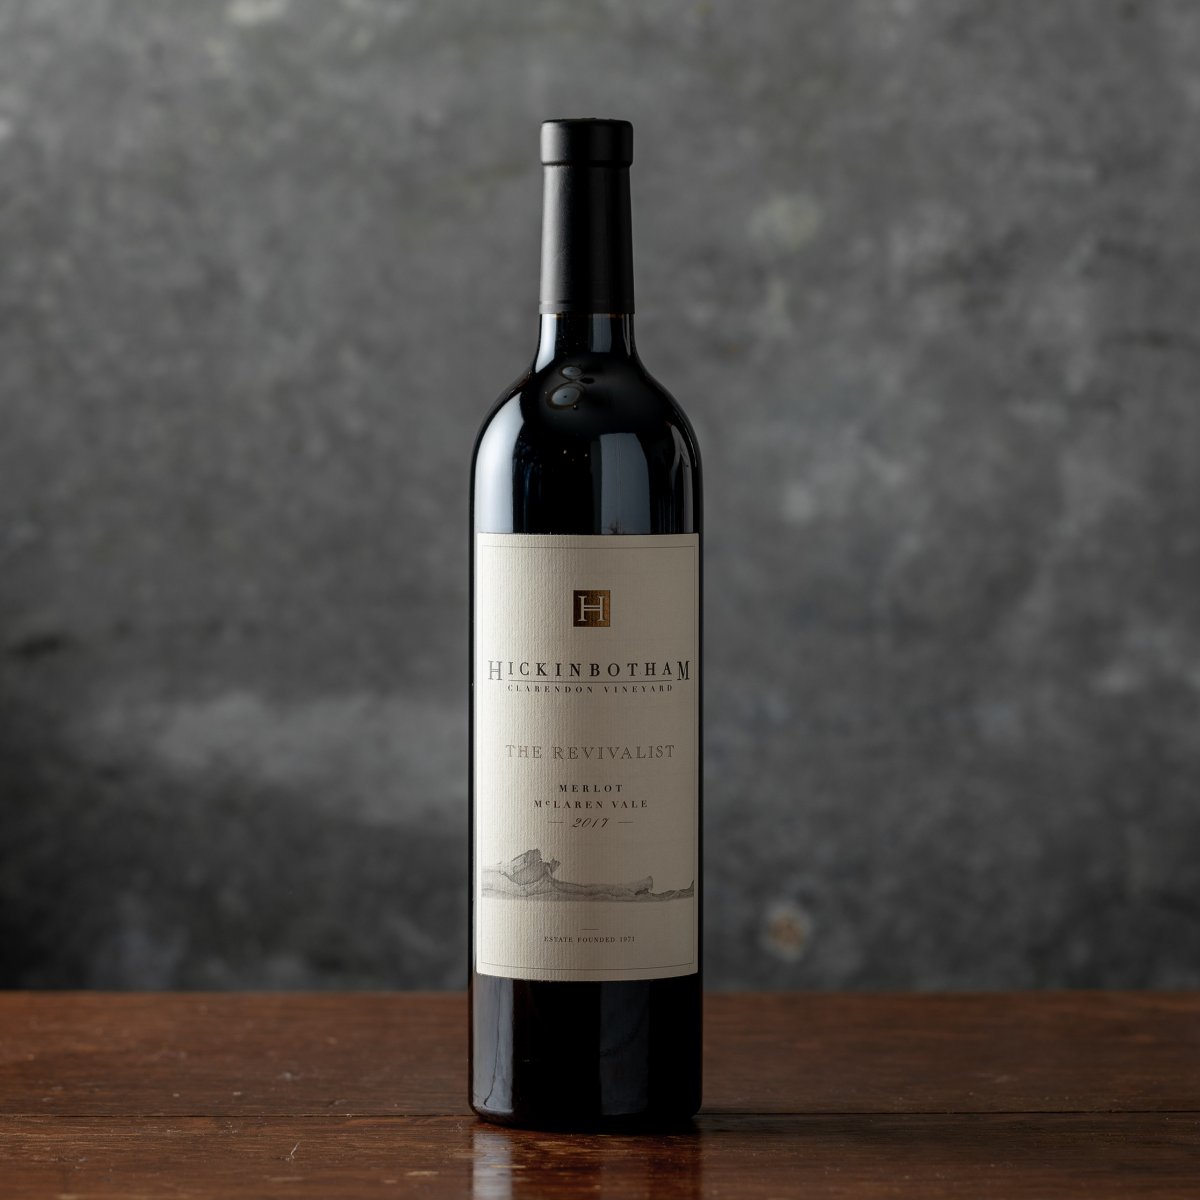 Wine bottle of The Revivialist Merlot against a gray backdrop